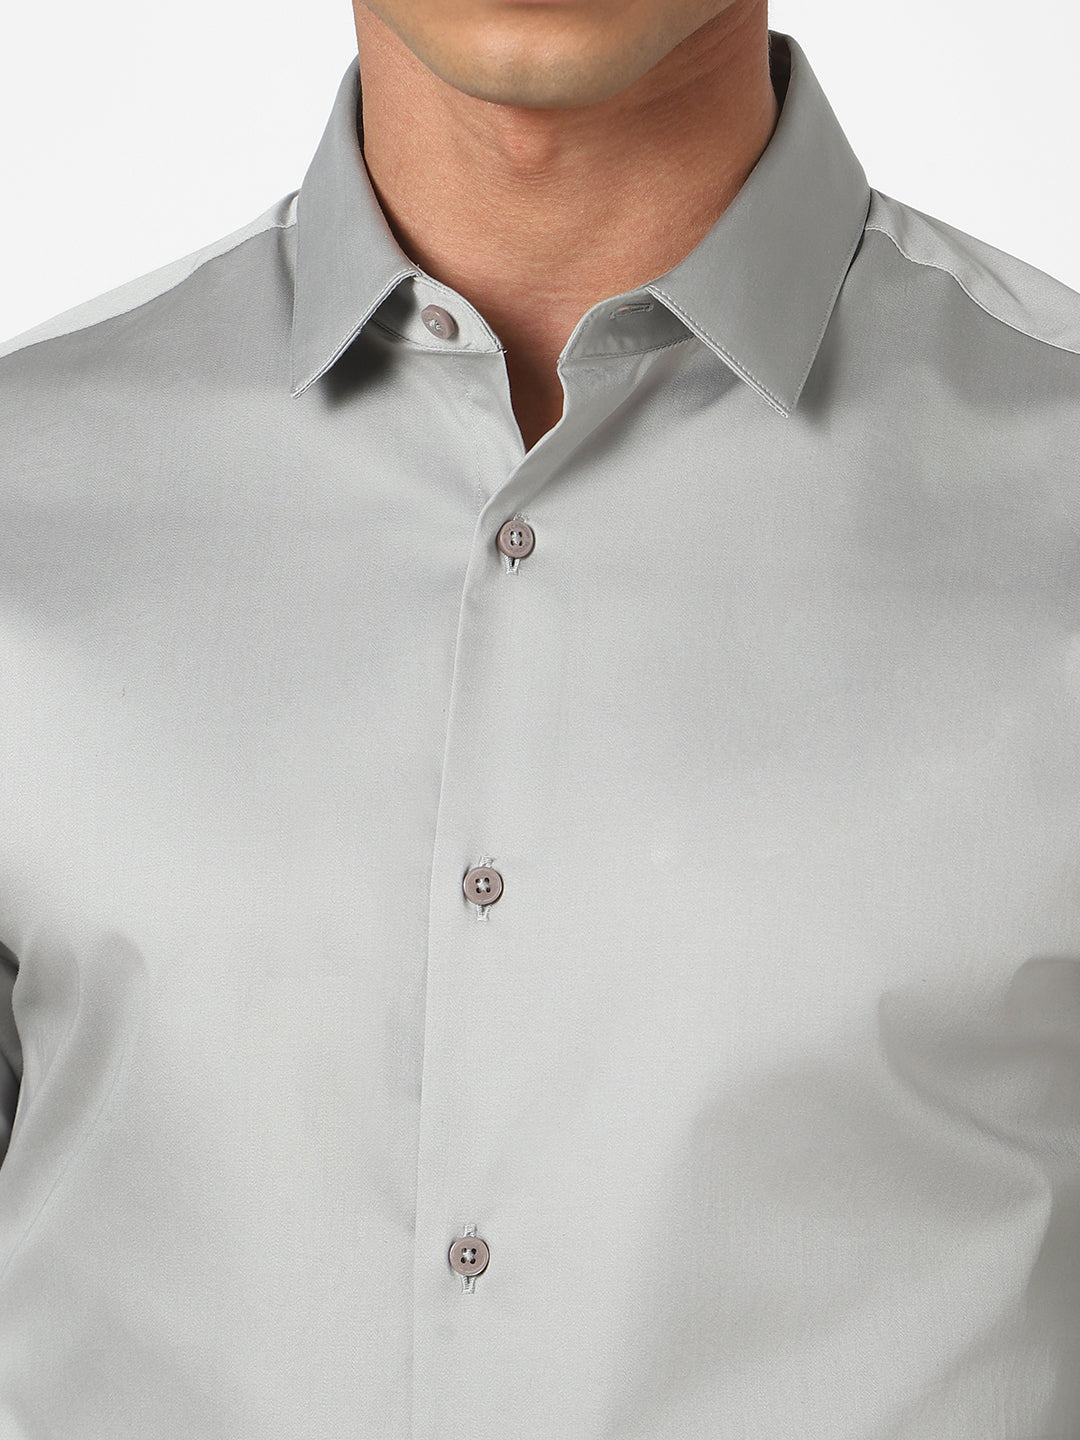 Buy Men Grey Regular Fit Formal Full Sleeves Formal Shirt Online - 172957 |  Peter England